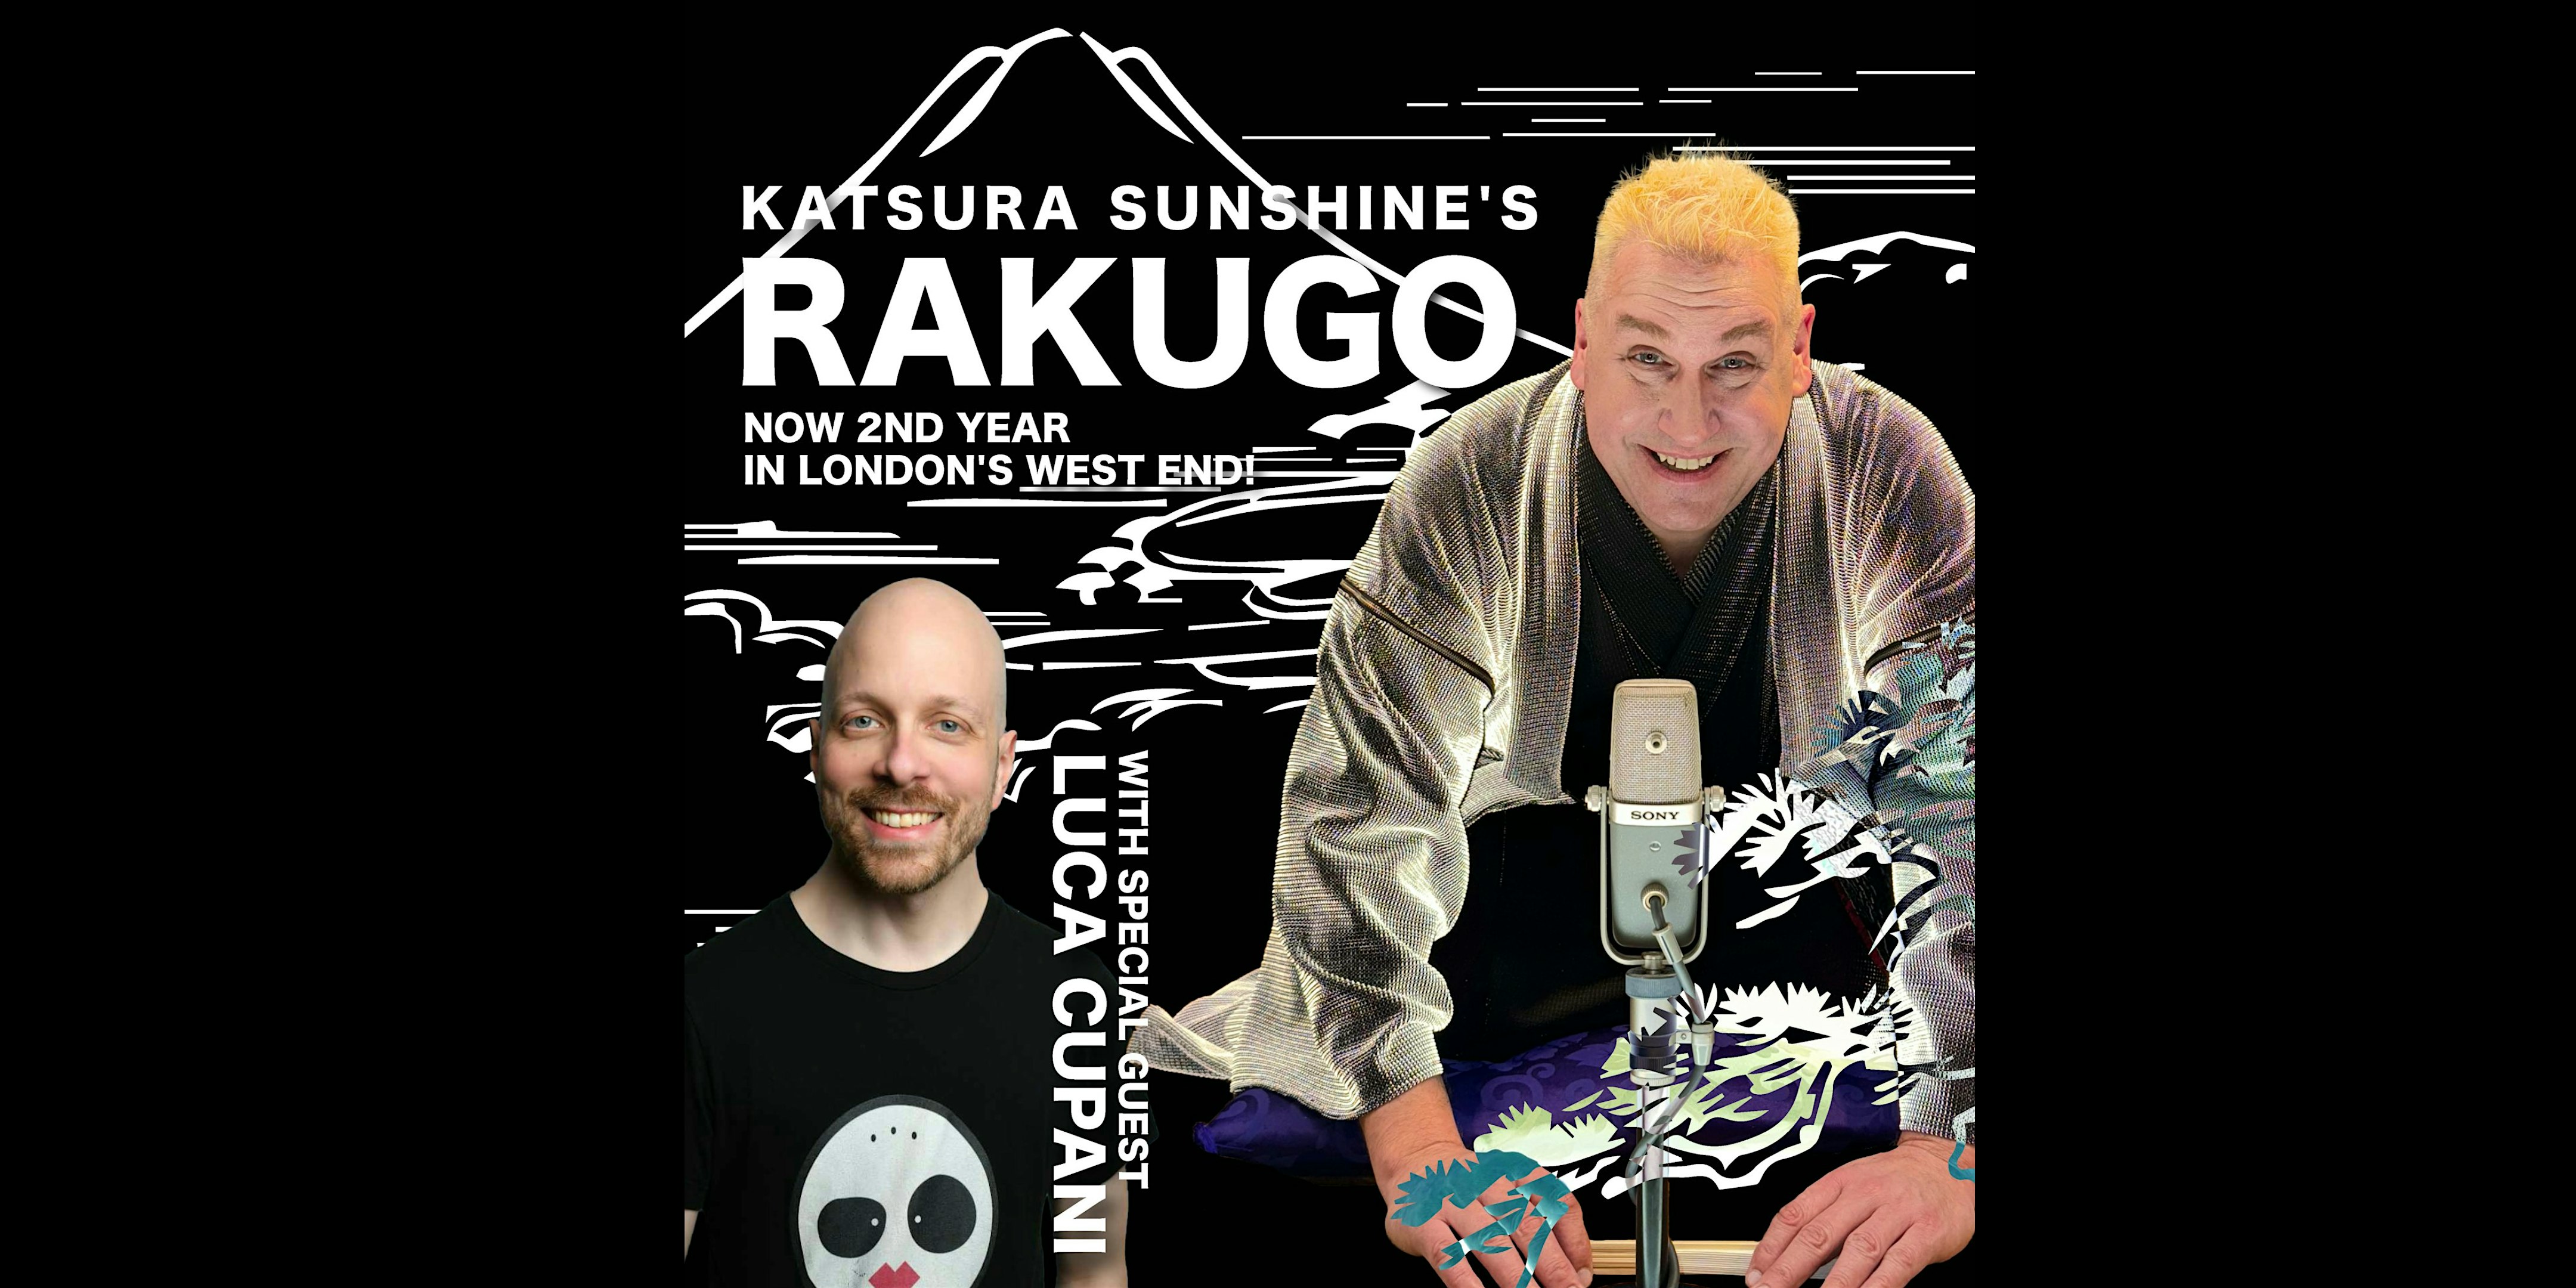 Katsura Sunshine's Rakugo - with special guest Luca Cupani